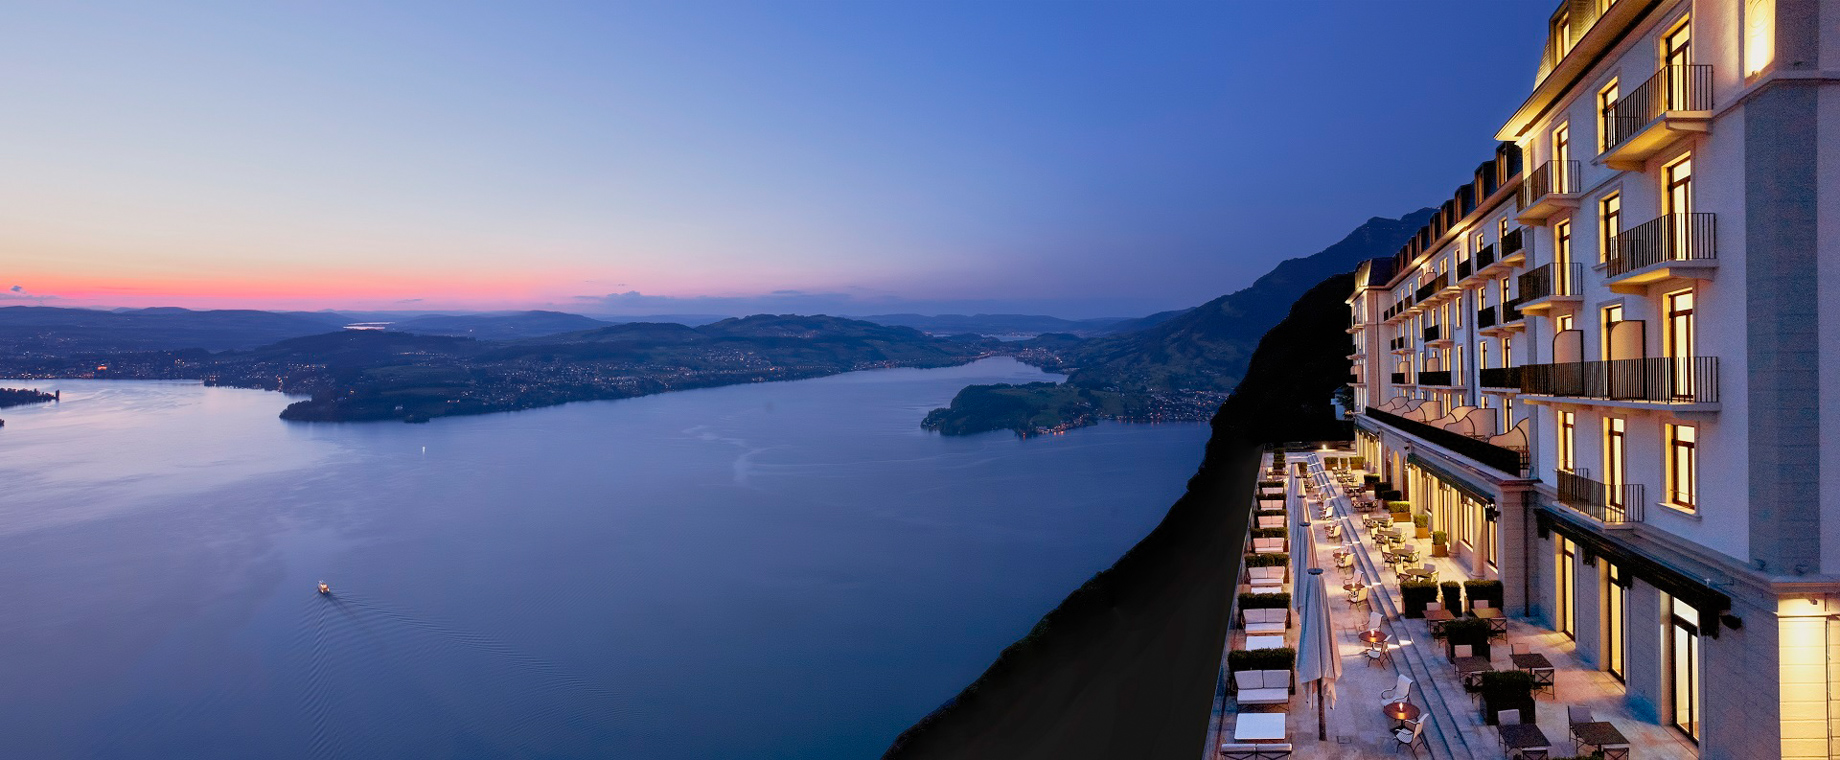 Palace Hotel – Burgenstock Hotels & Resort – Obburgen, Switzerland – Palace Hotel Lucerne Lakeview at Night